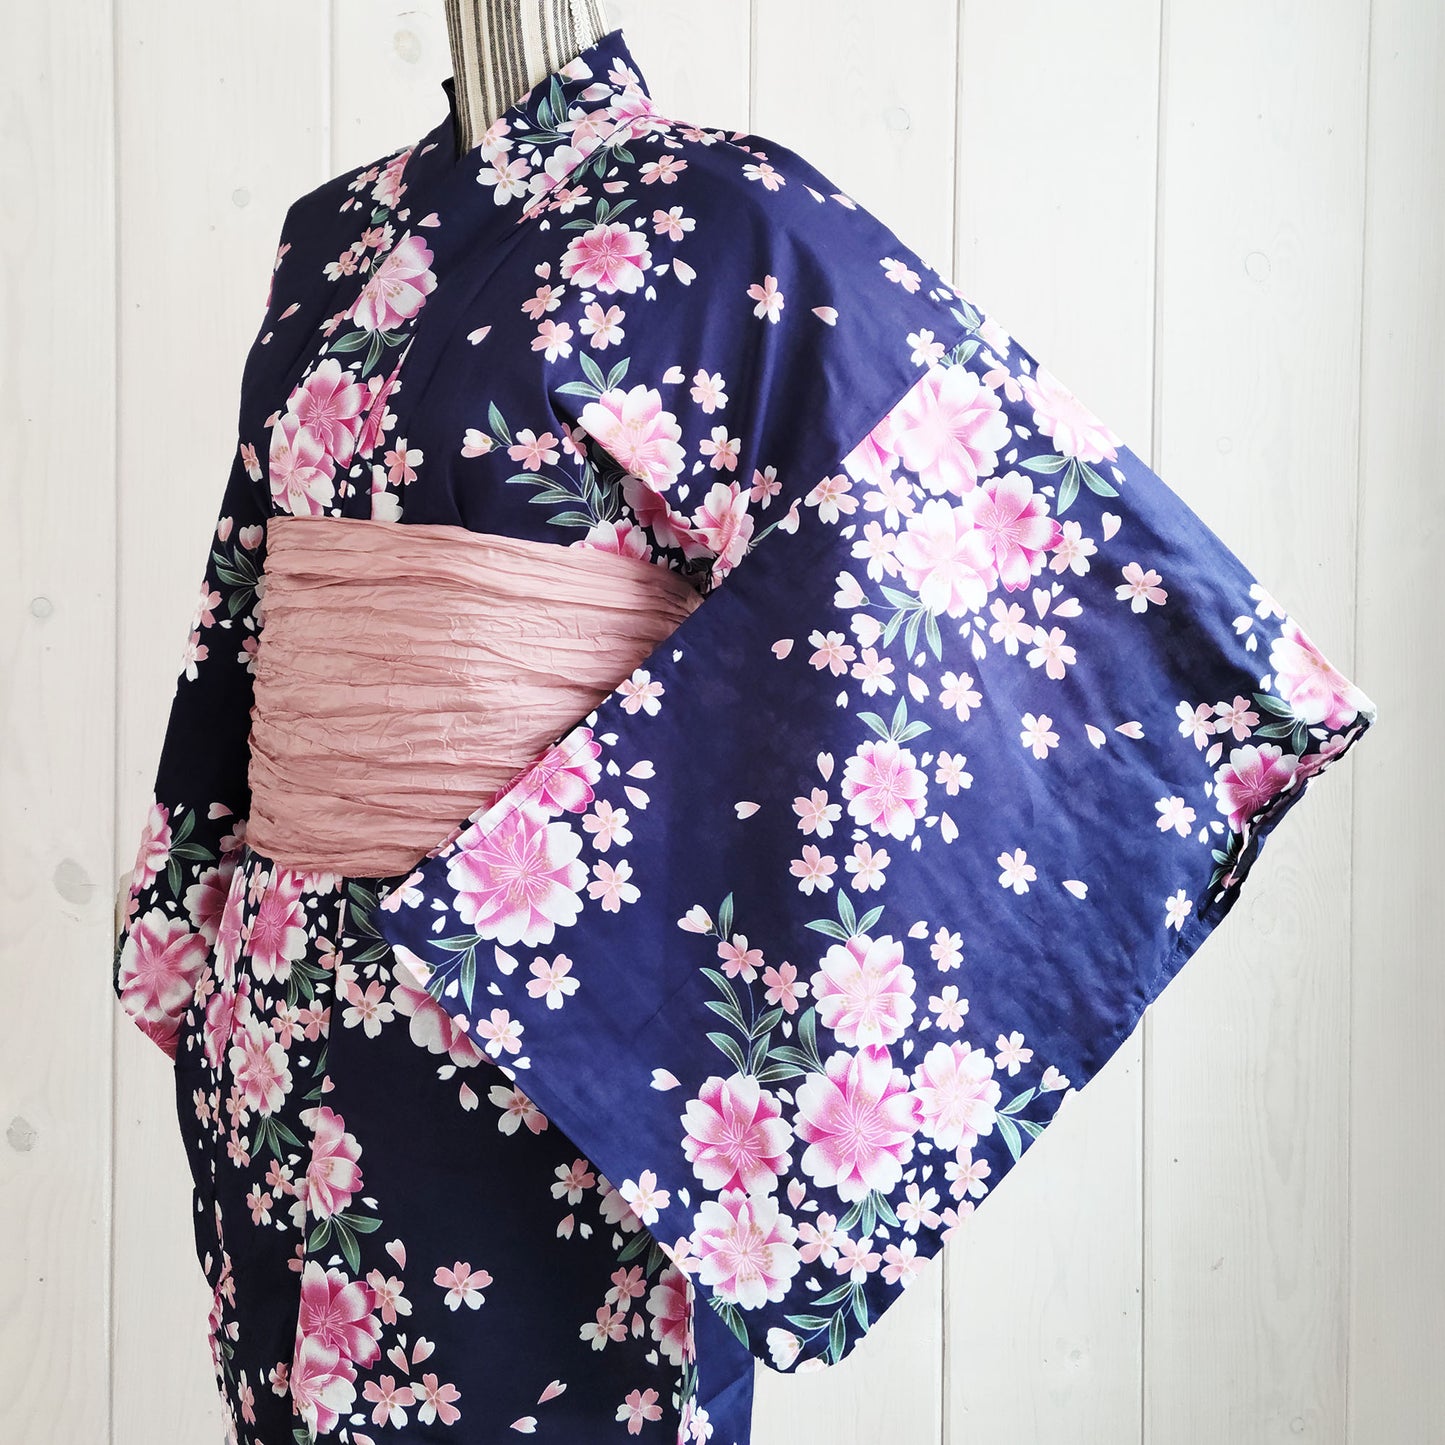 Women's Japanese Traditional Yukata Kimono - Pink Cherry Blossoms in Dark Blue